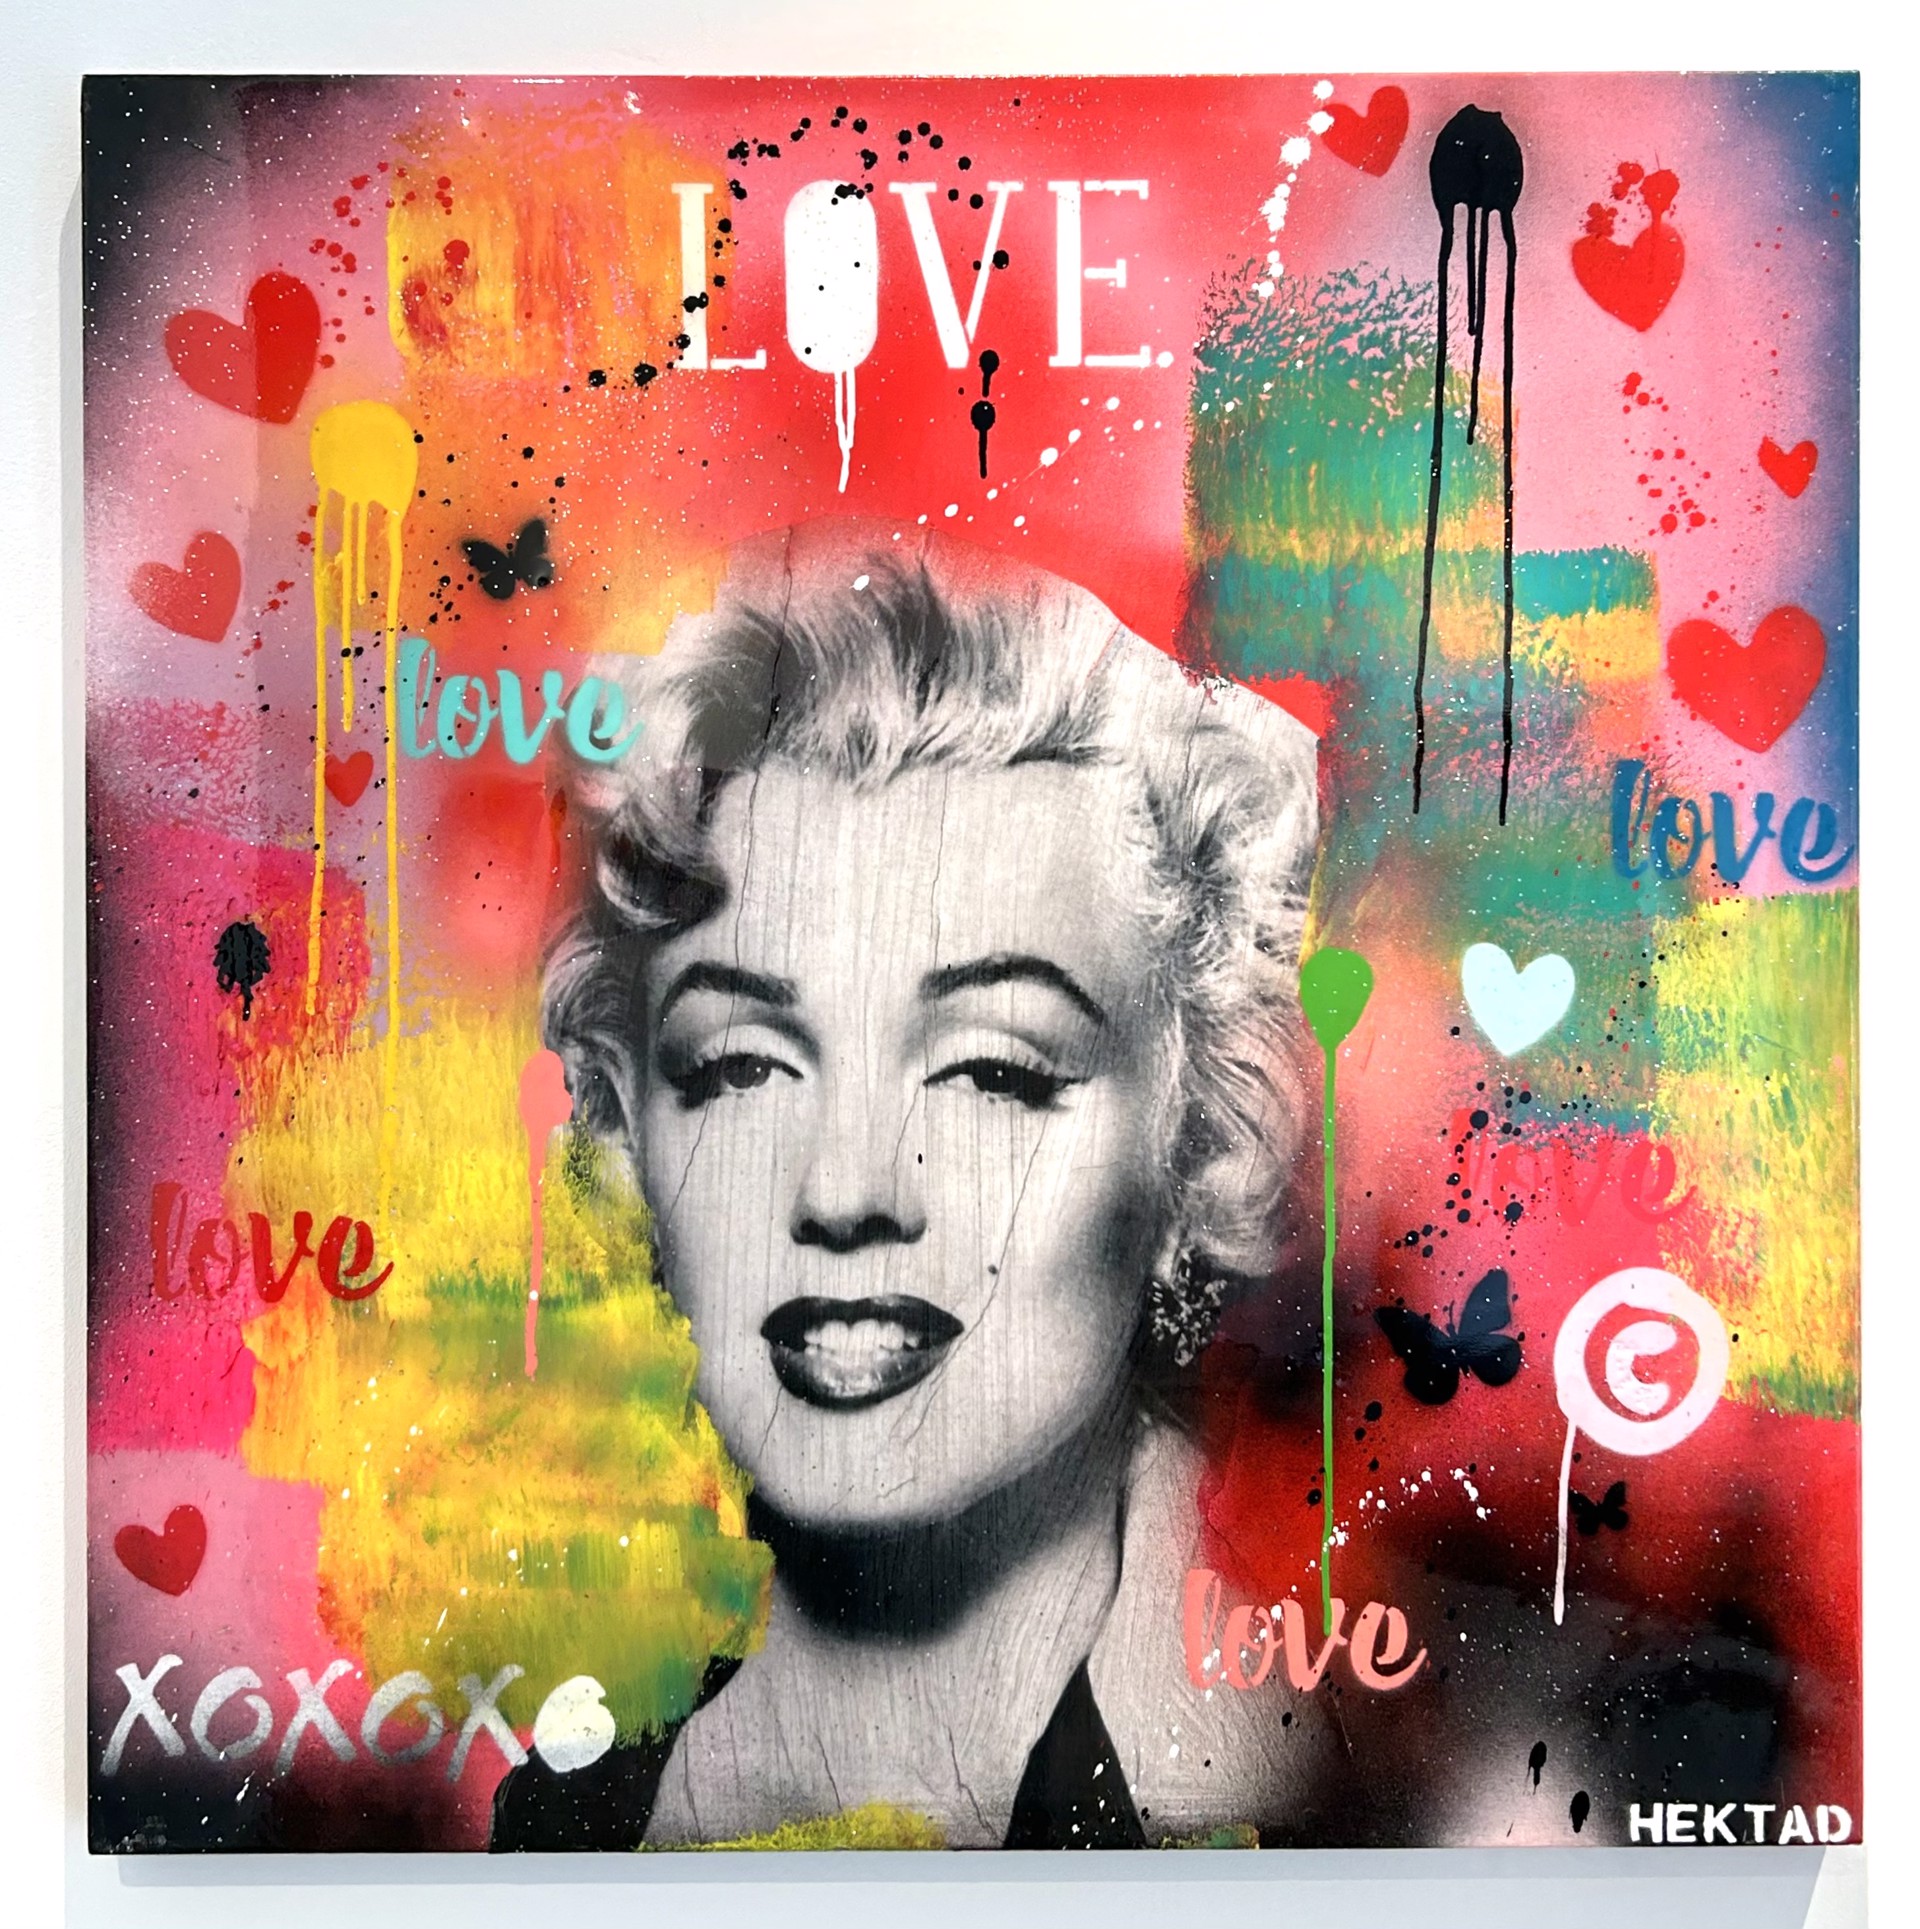 Love That Monroe by HEKTAD